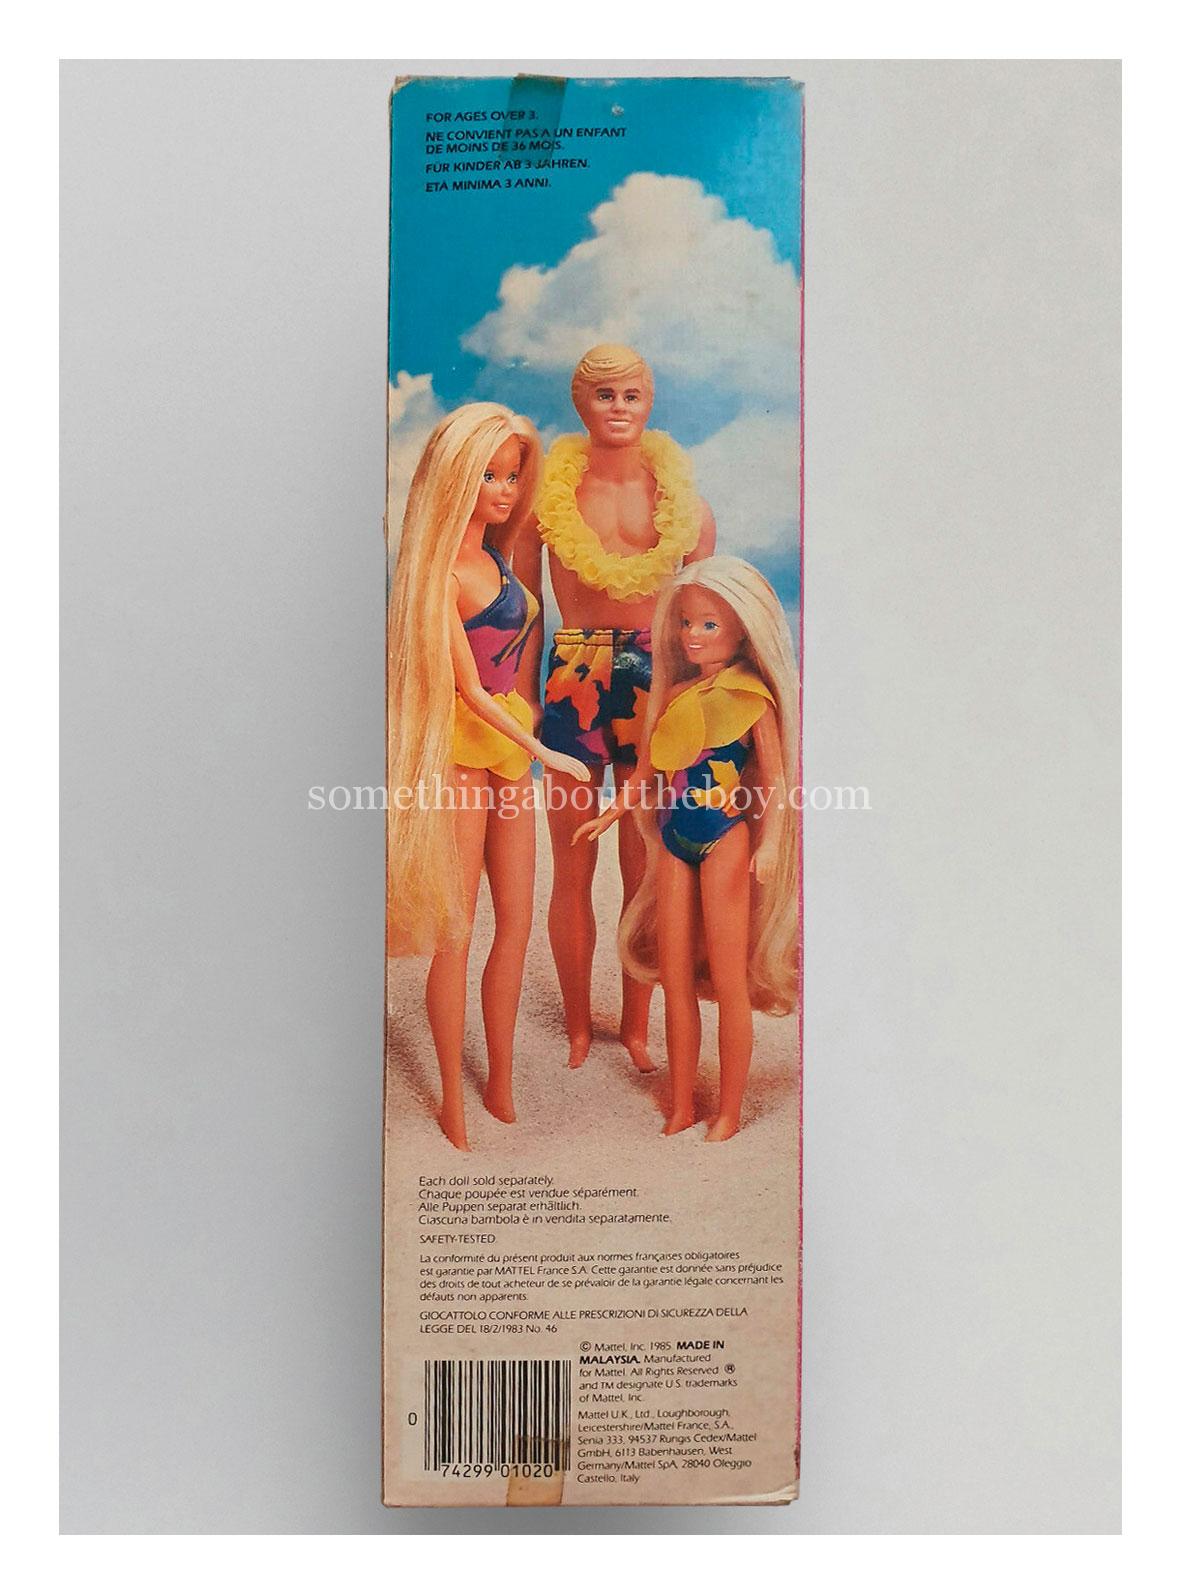 1986 #1020 Tropical Ken (European packaging) made in Malaysia